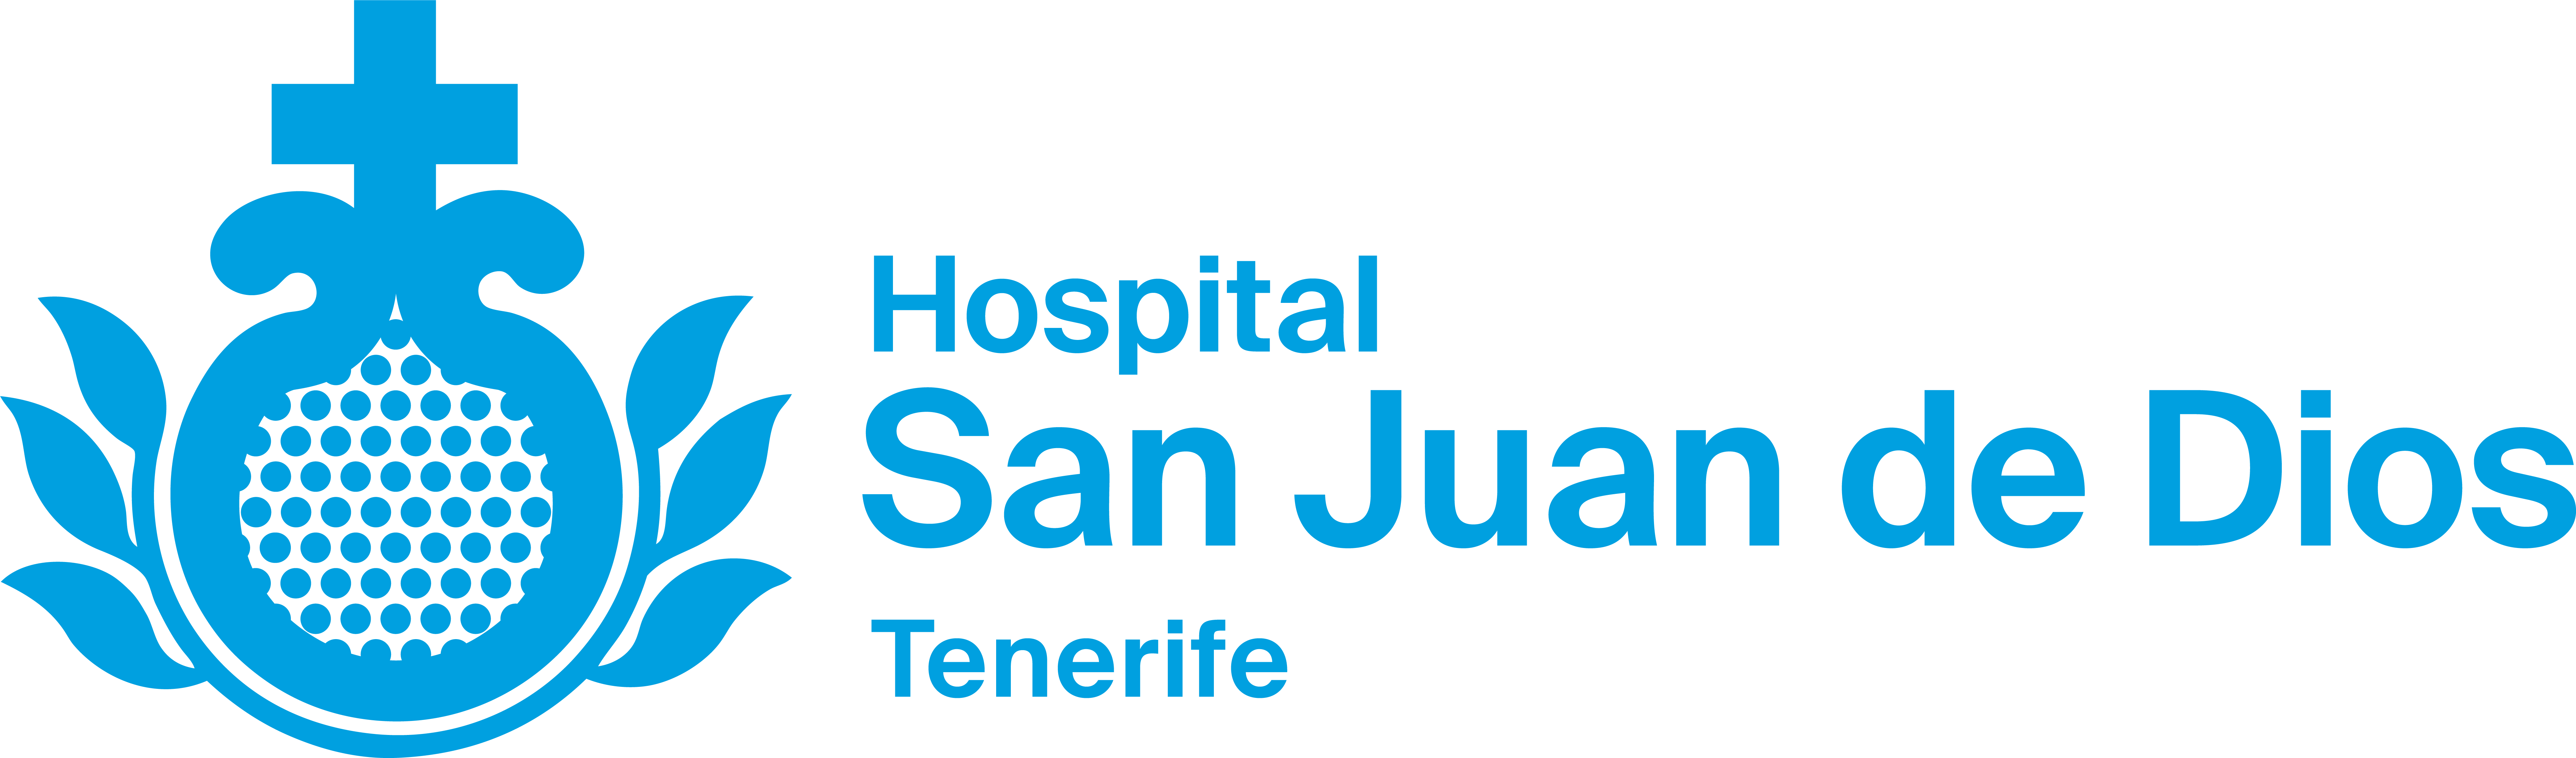 Logotipo de la clínica ***Hospital San Juan de Dios Tenerife